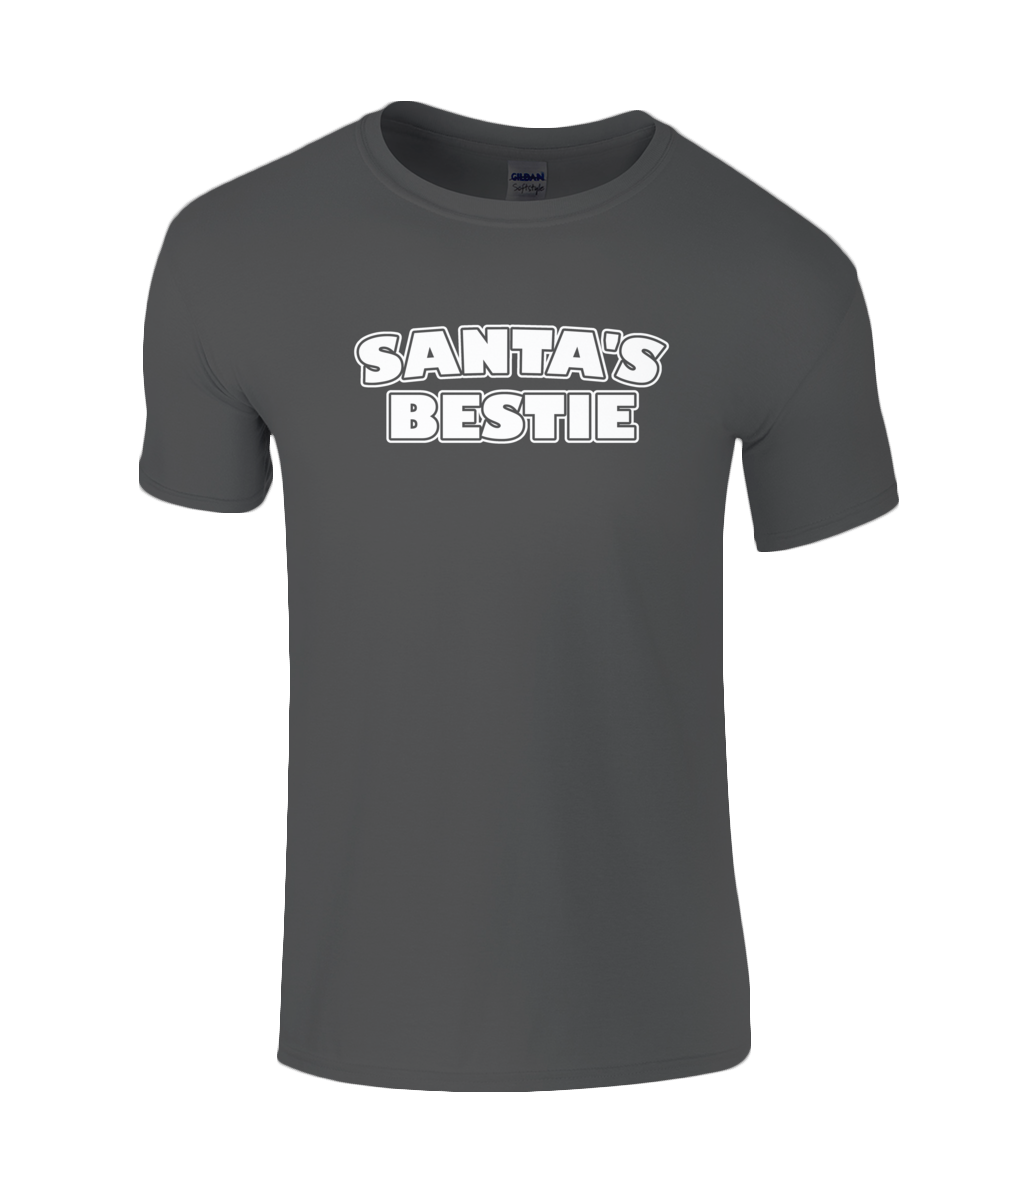 Santa's Bestie Kids T-Shirt